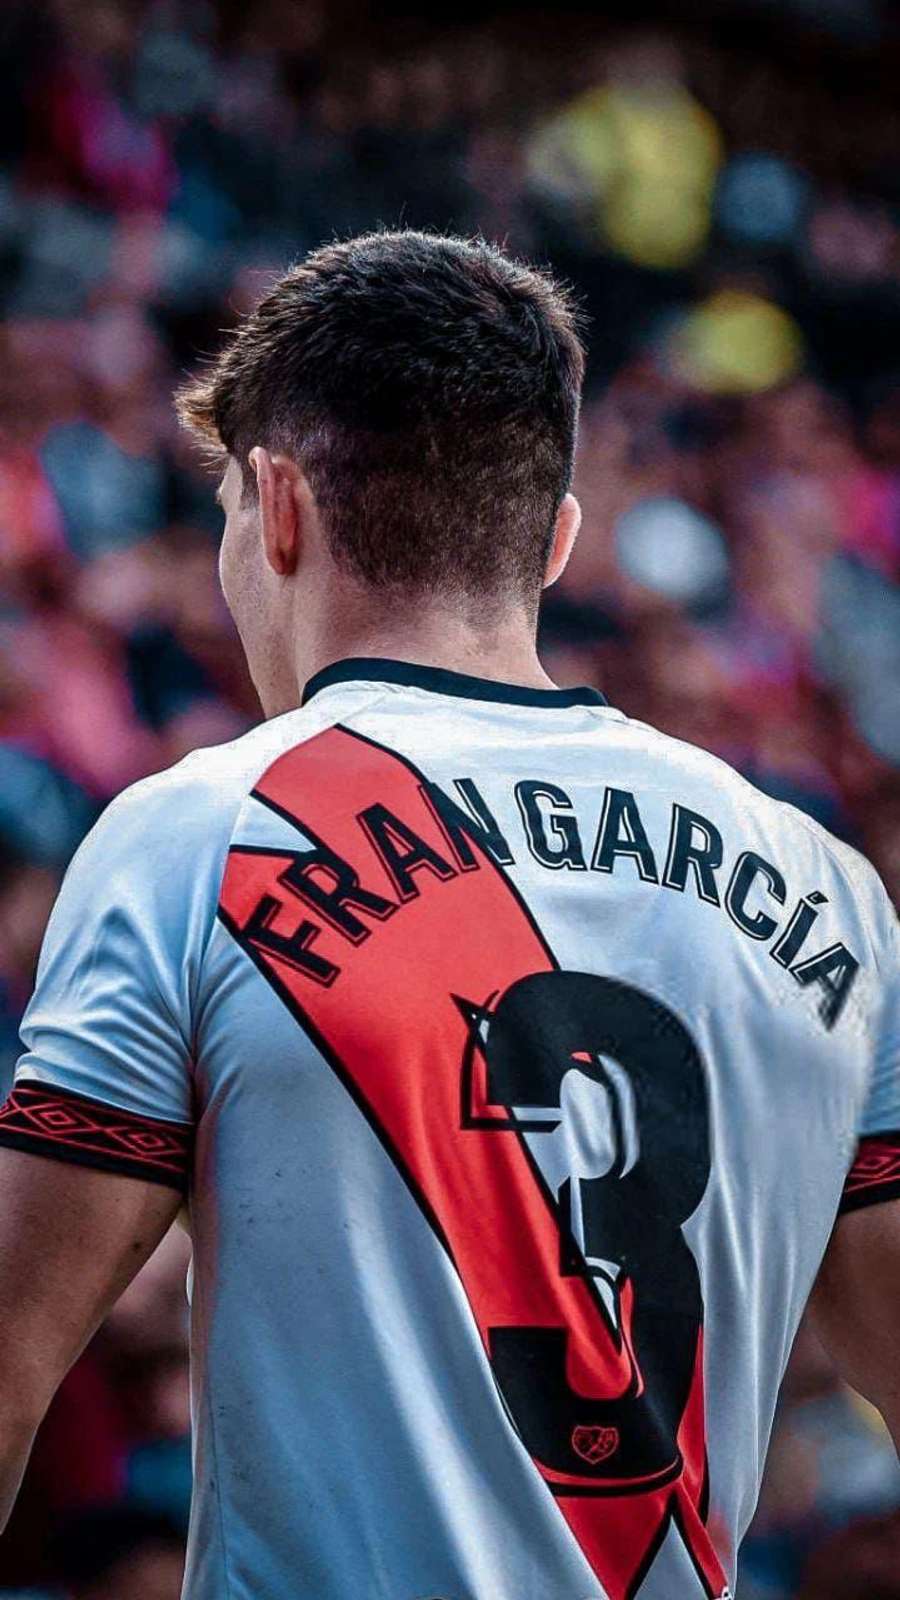 Fran Garcia is one of the best Spanish left backs